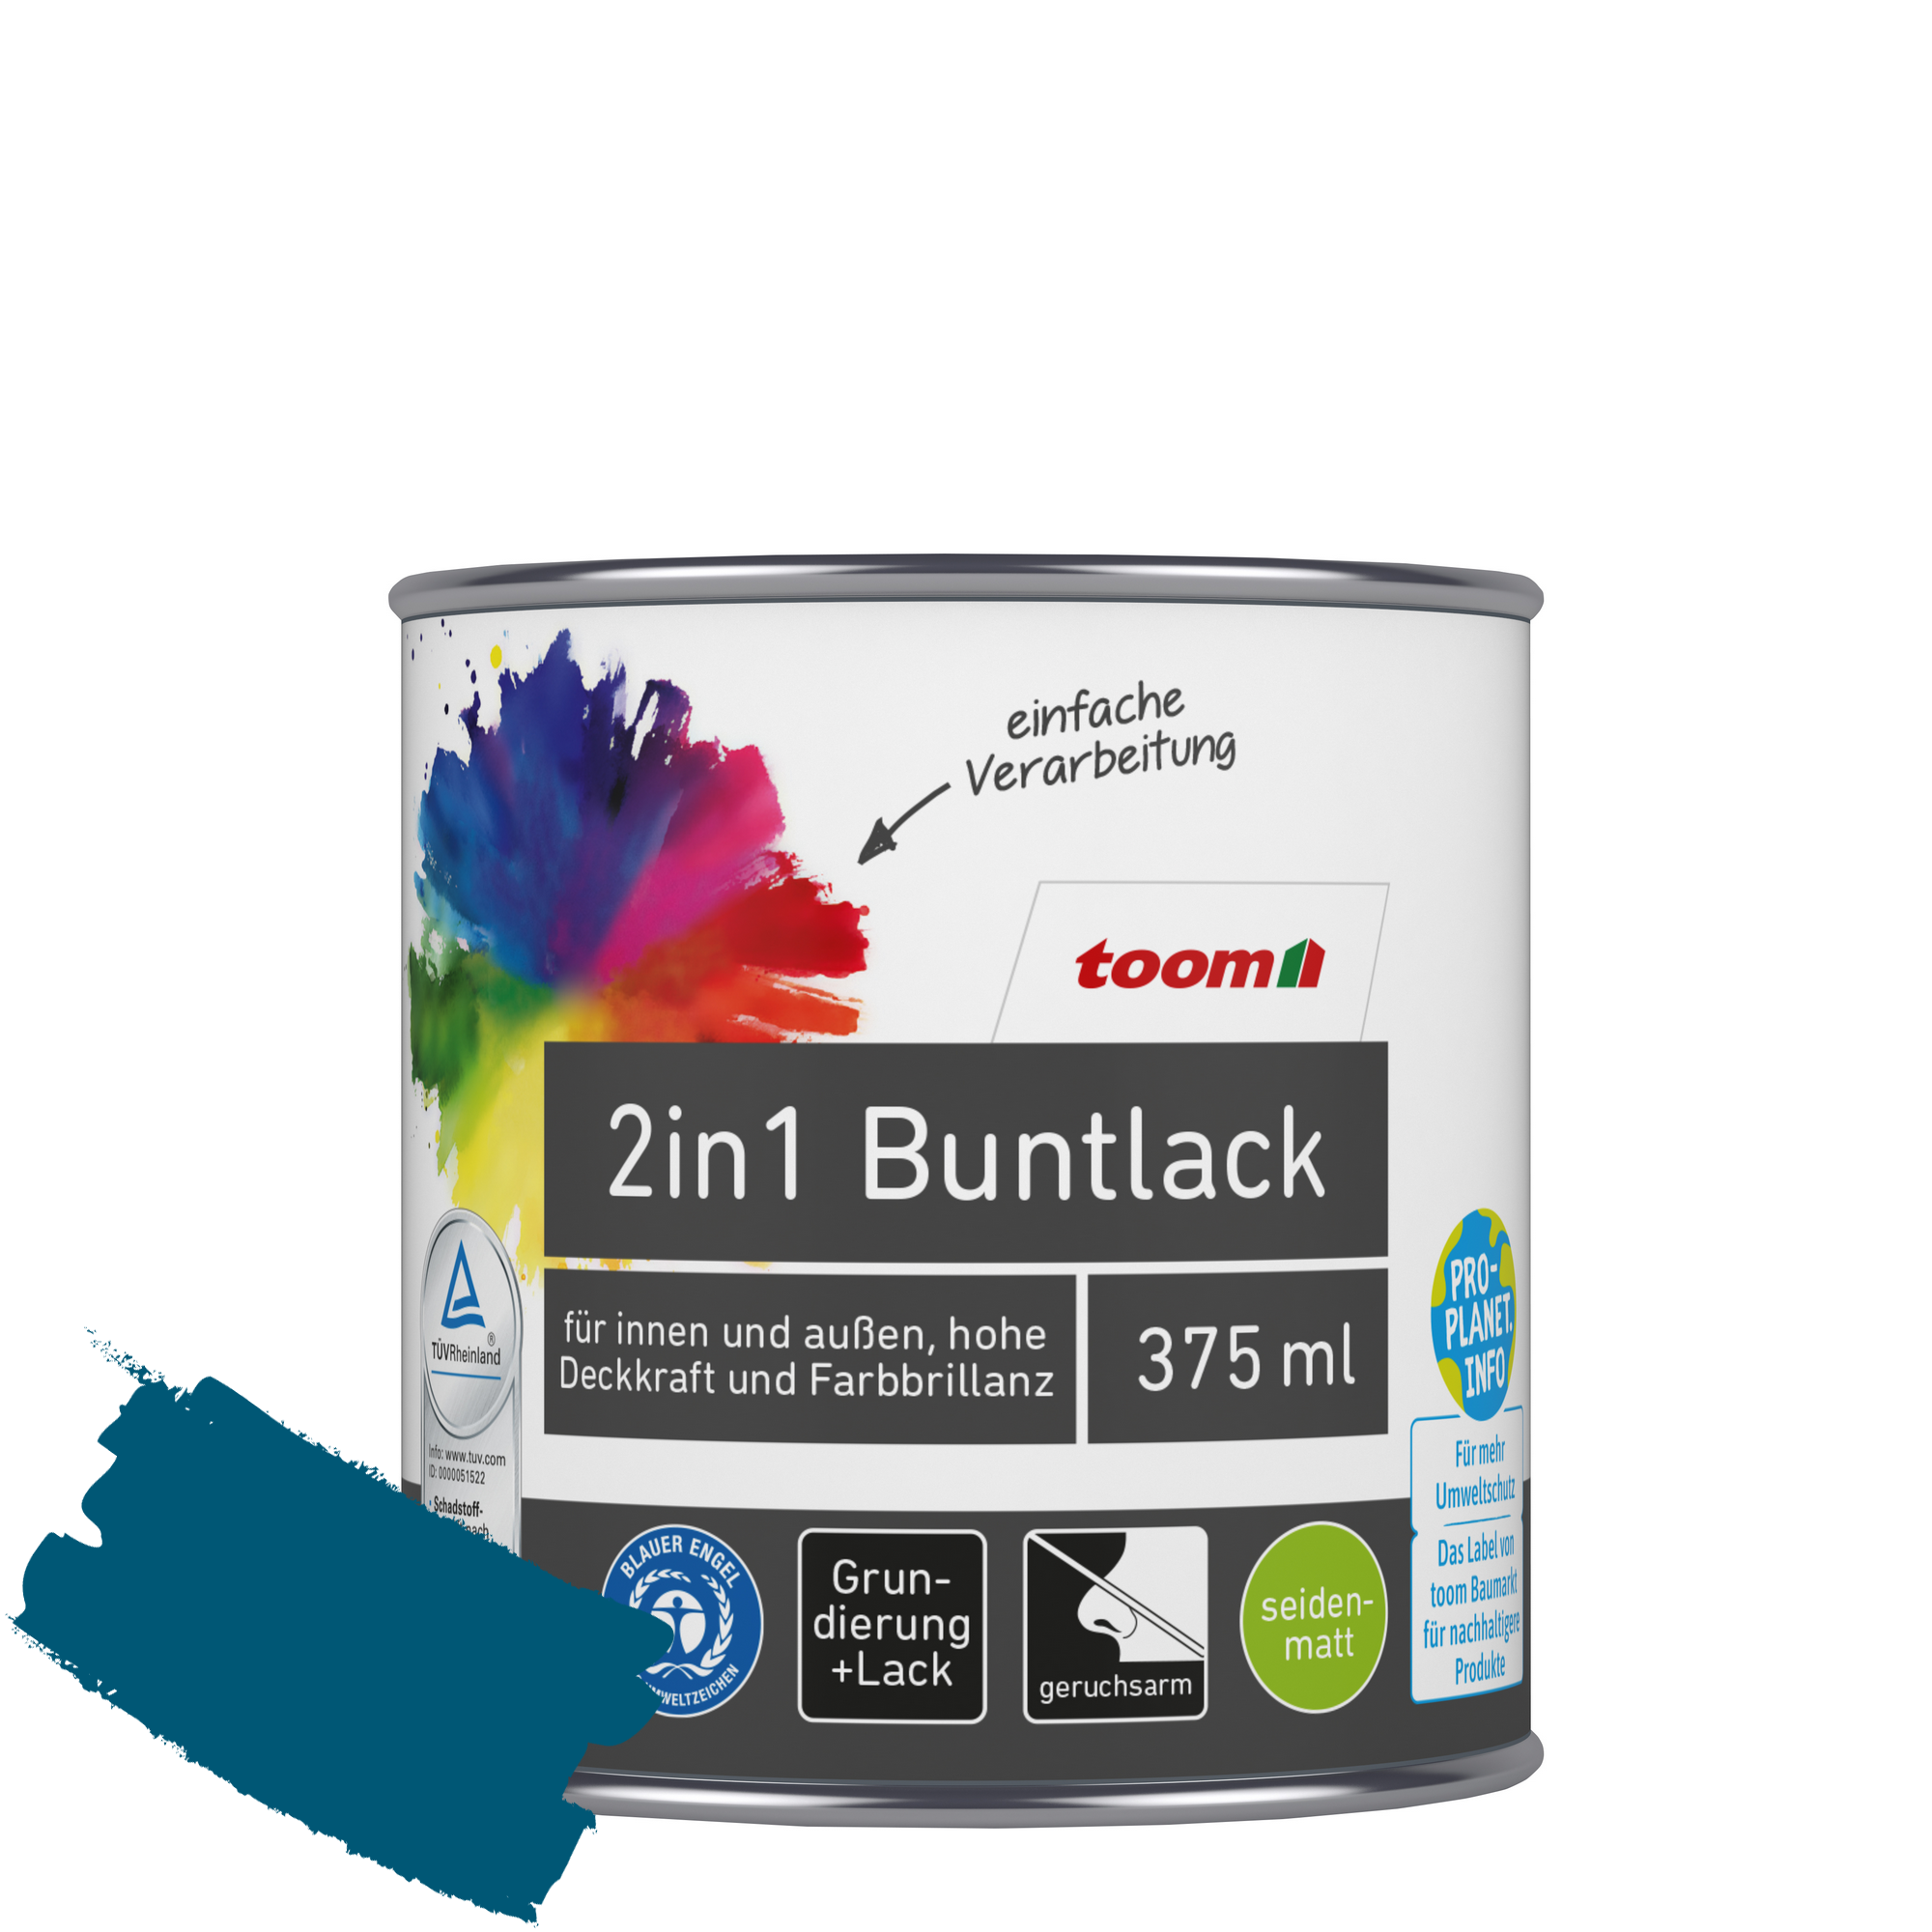 2in1 Buntlack 'Blaupause' enzianblau seidenmatt 375 ml + product picture